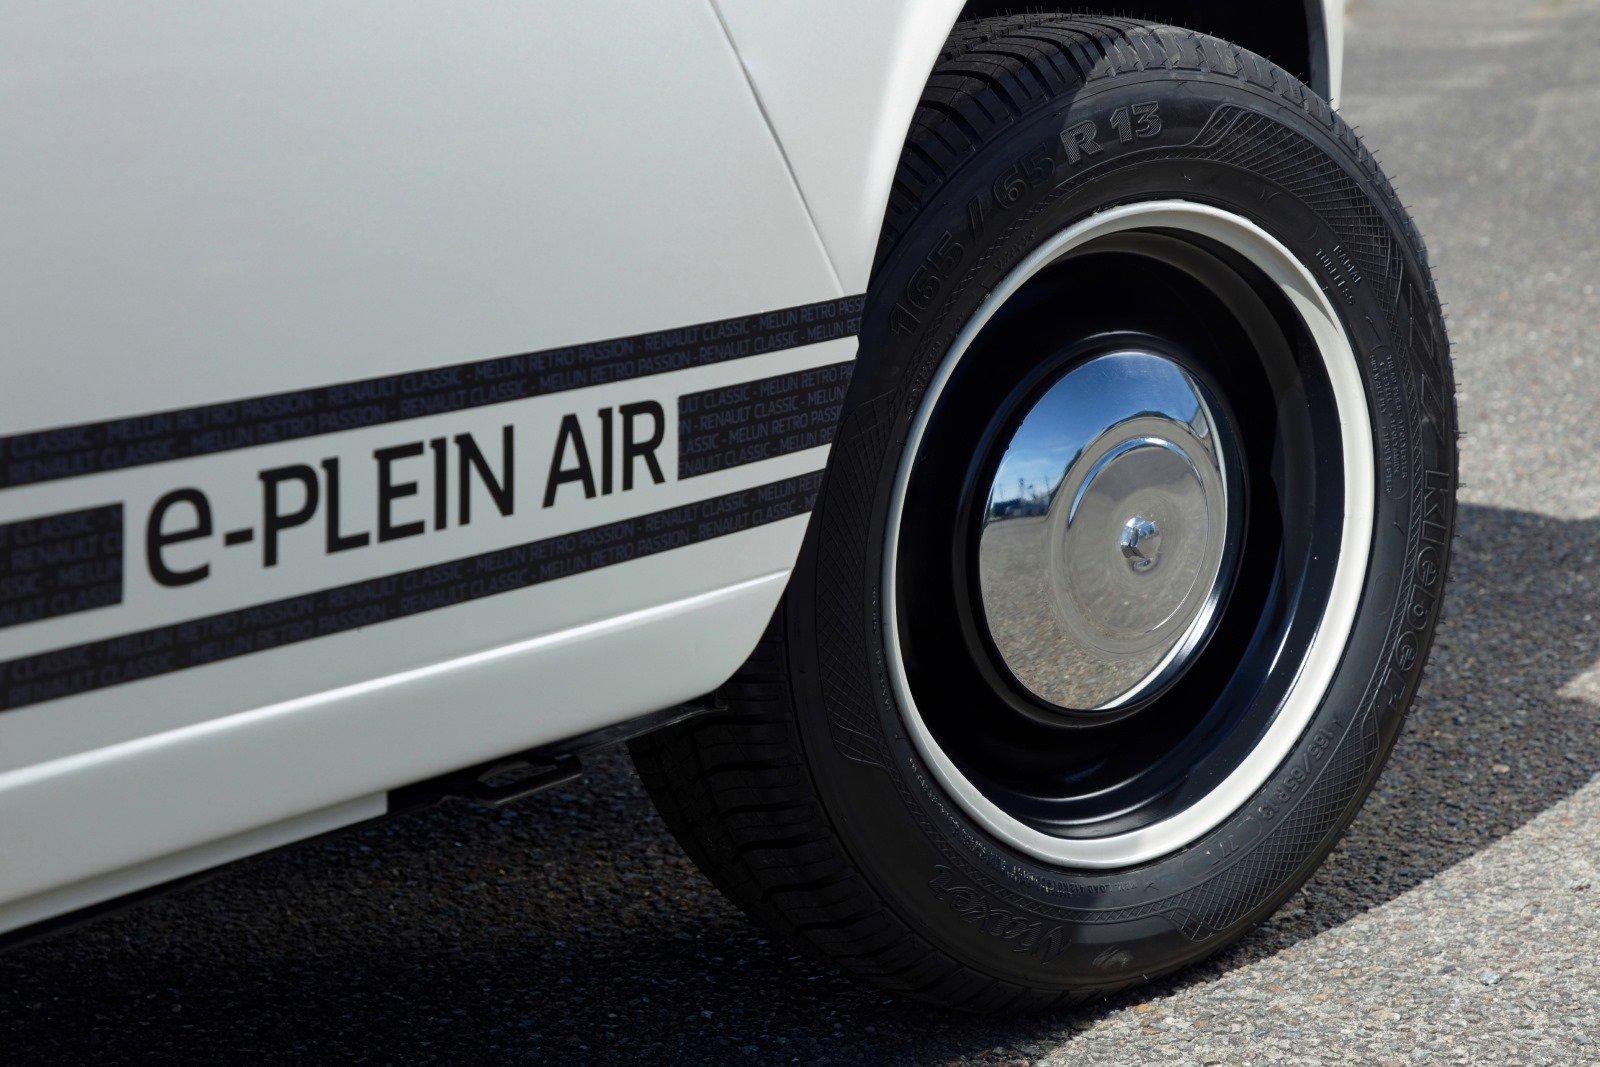 Renault e-Plein Air ความคลาสสิคสมัยใหม่ในรูปลักษณ์รถยนต์ไฟฟ้าต้นแบบ